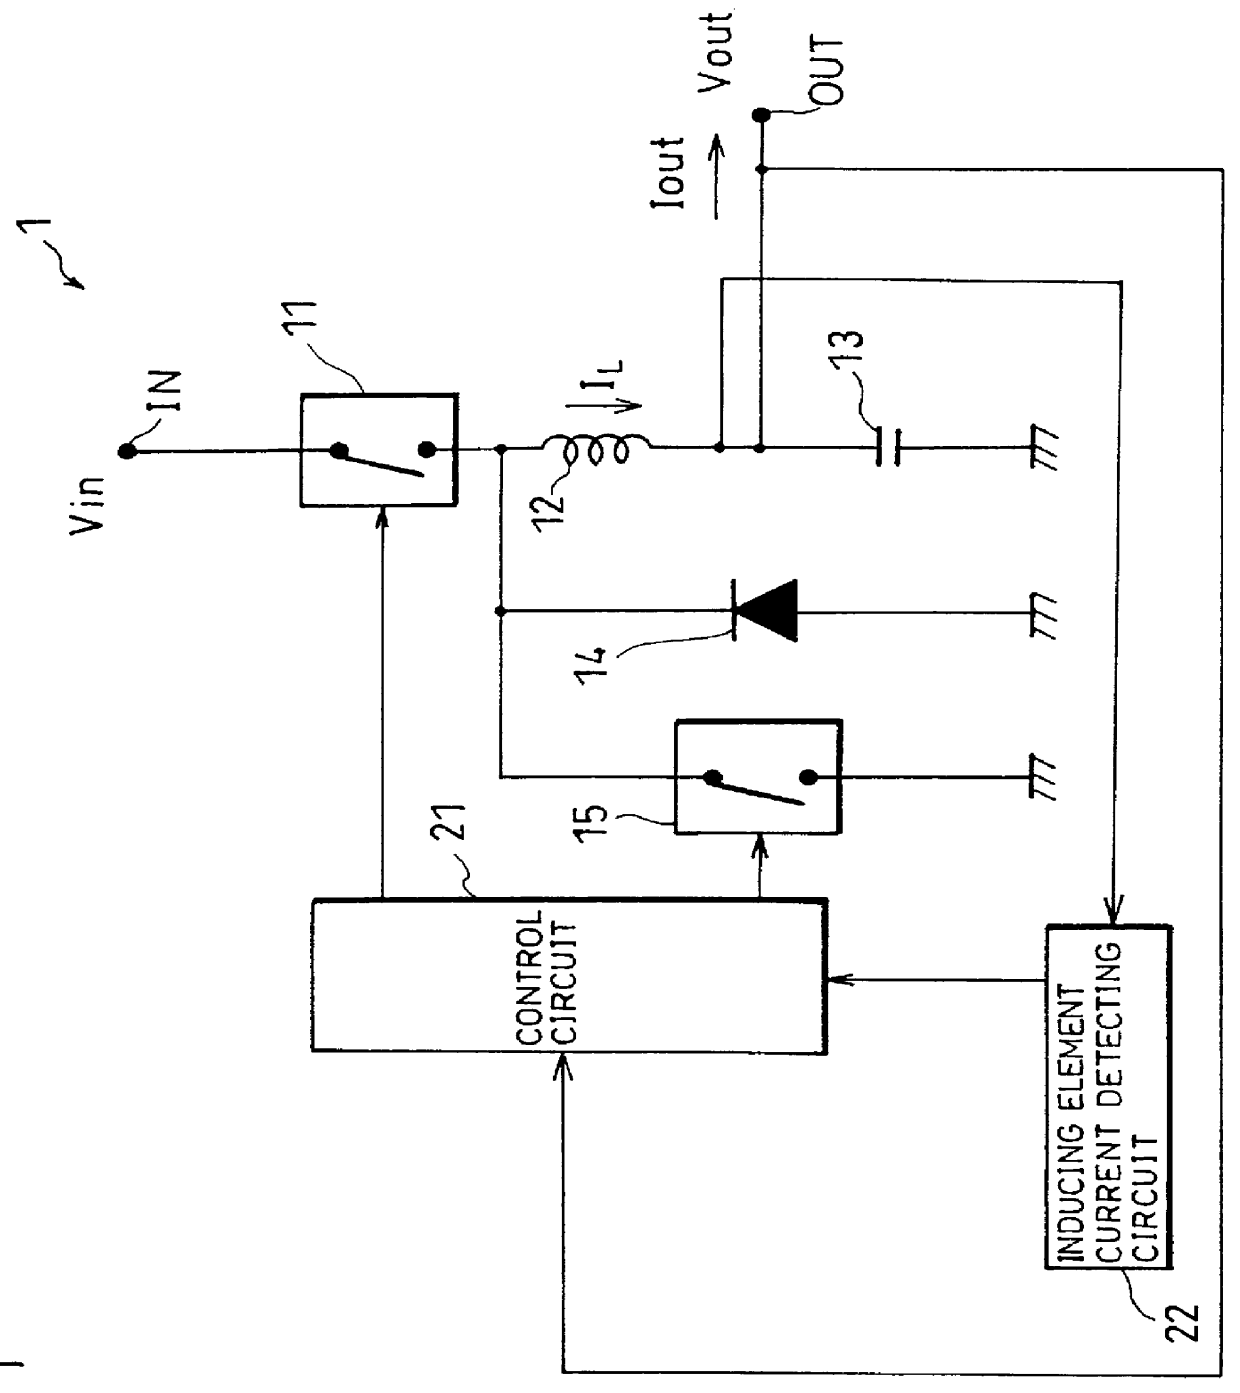 Synchronous rectifier circuit